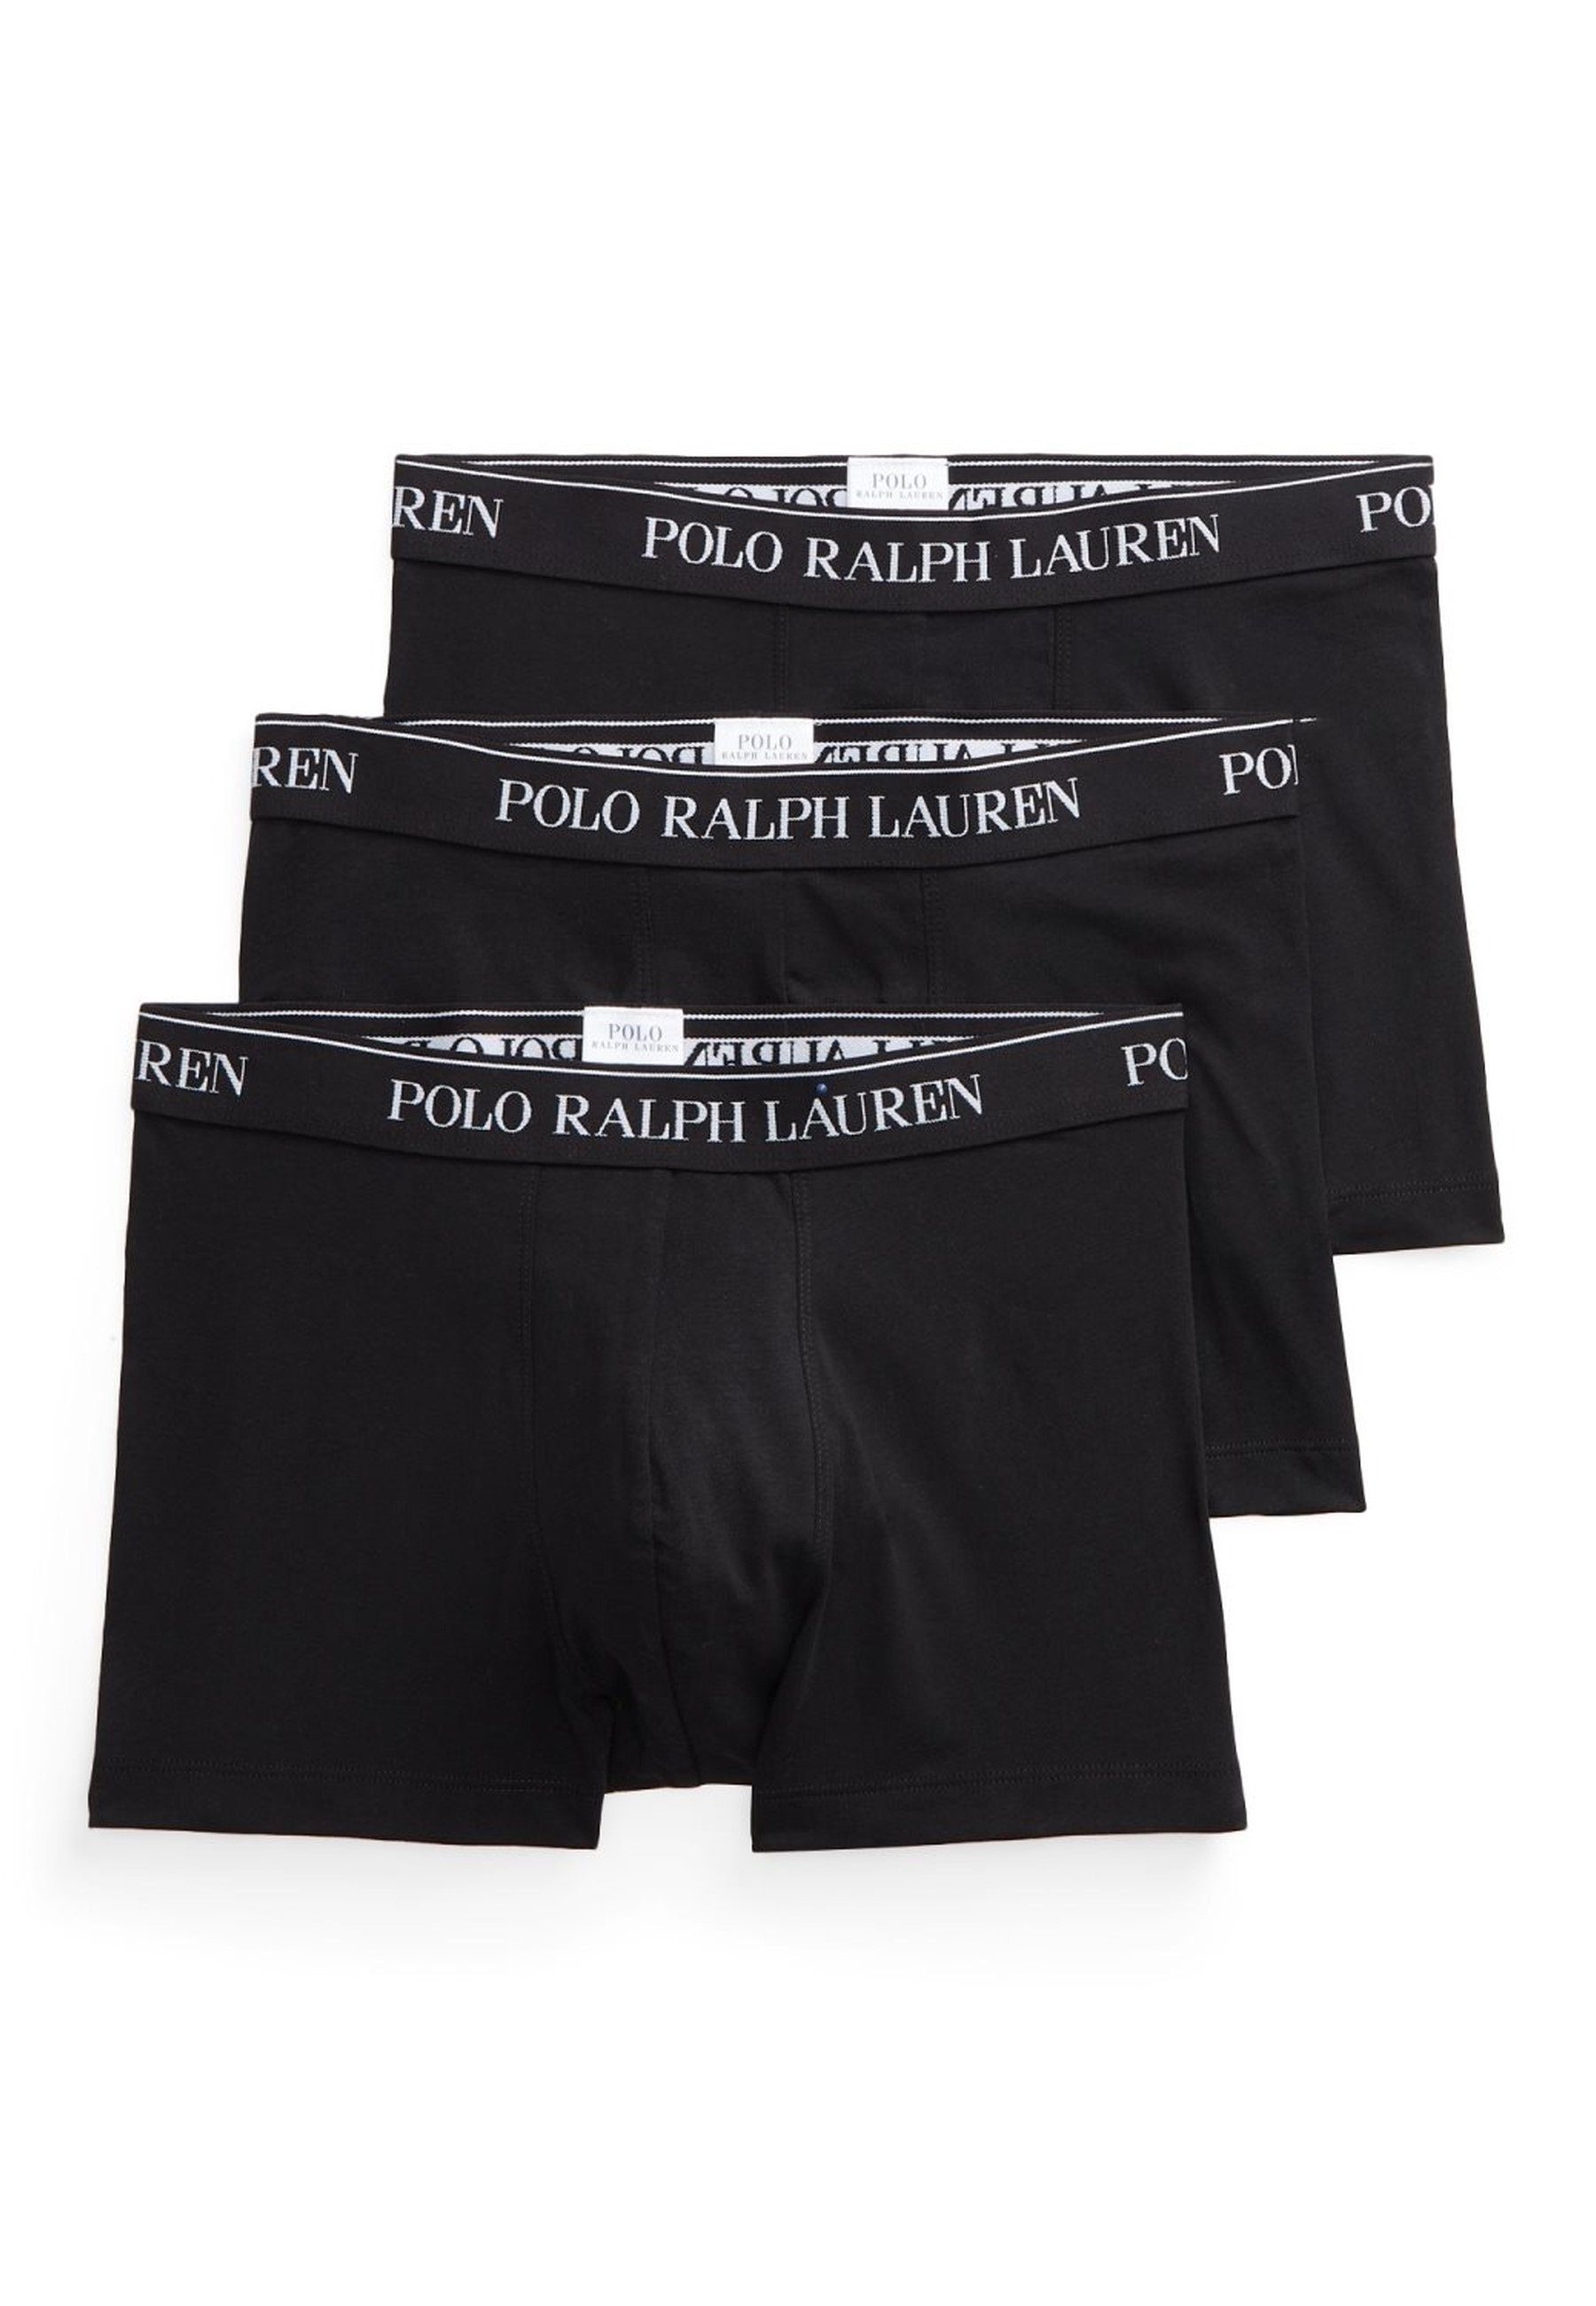 Polo Ralph Lauren Ralph Lauren Boxershorts Boxershorts Basic Trunks Dreierpack (3-St) schwarz